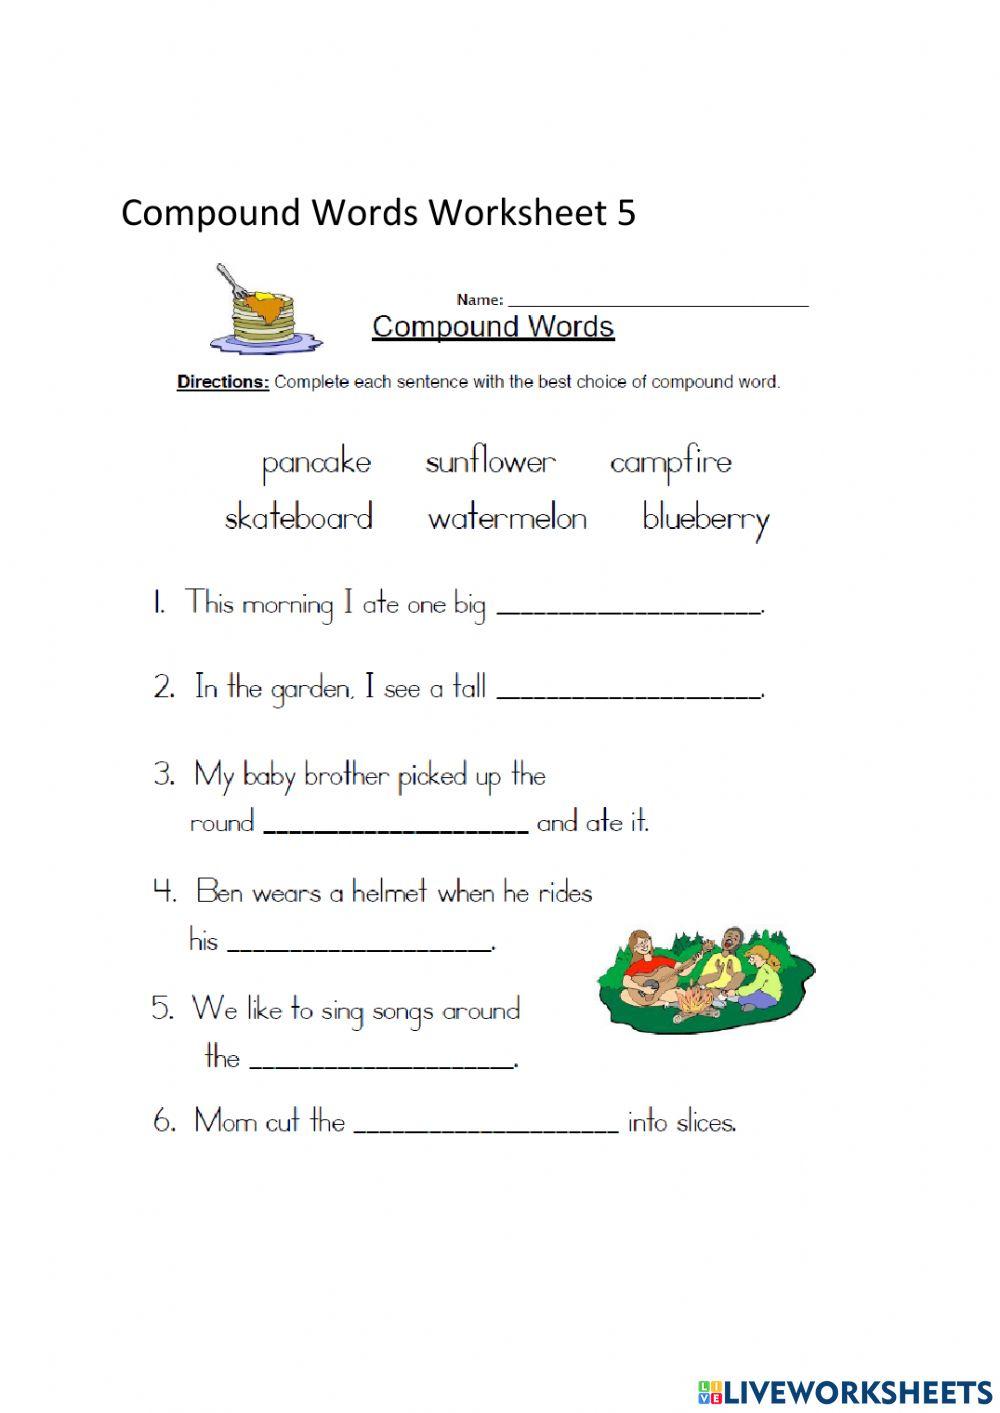 Compound Words Worksheet 5